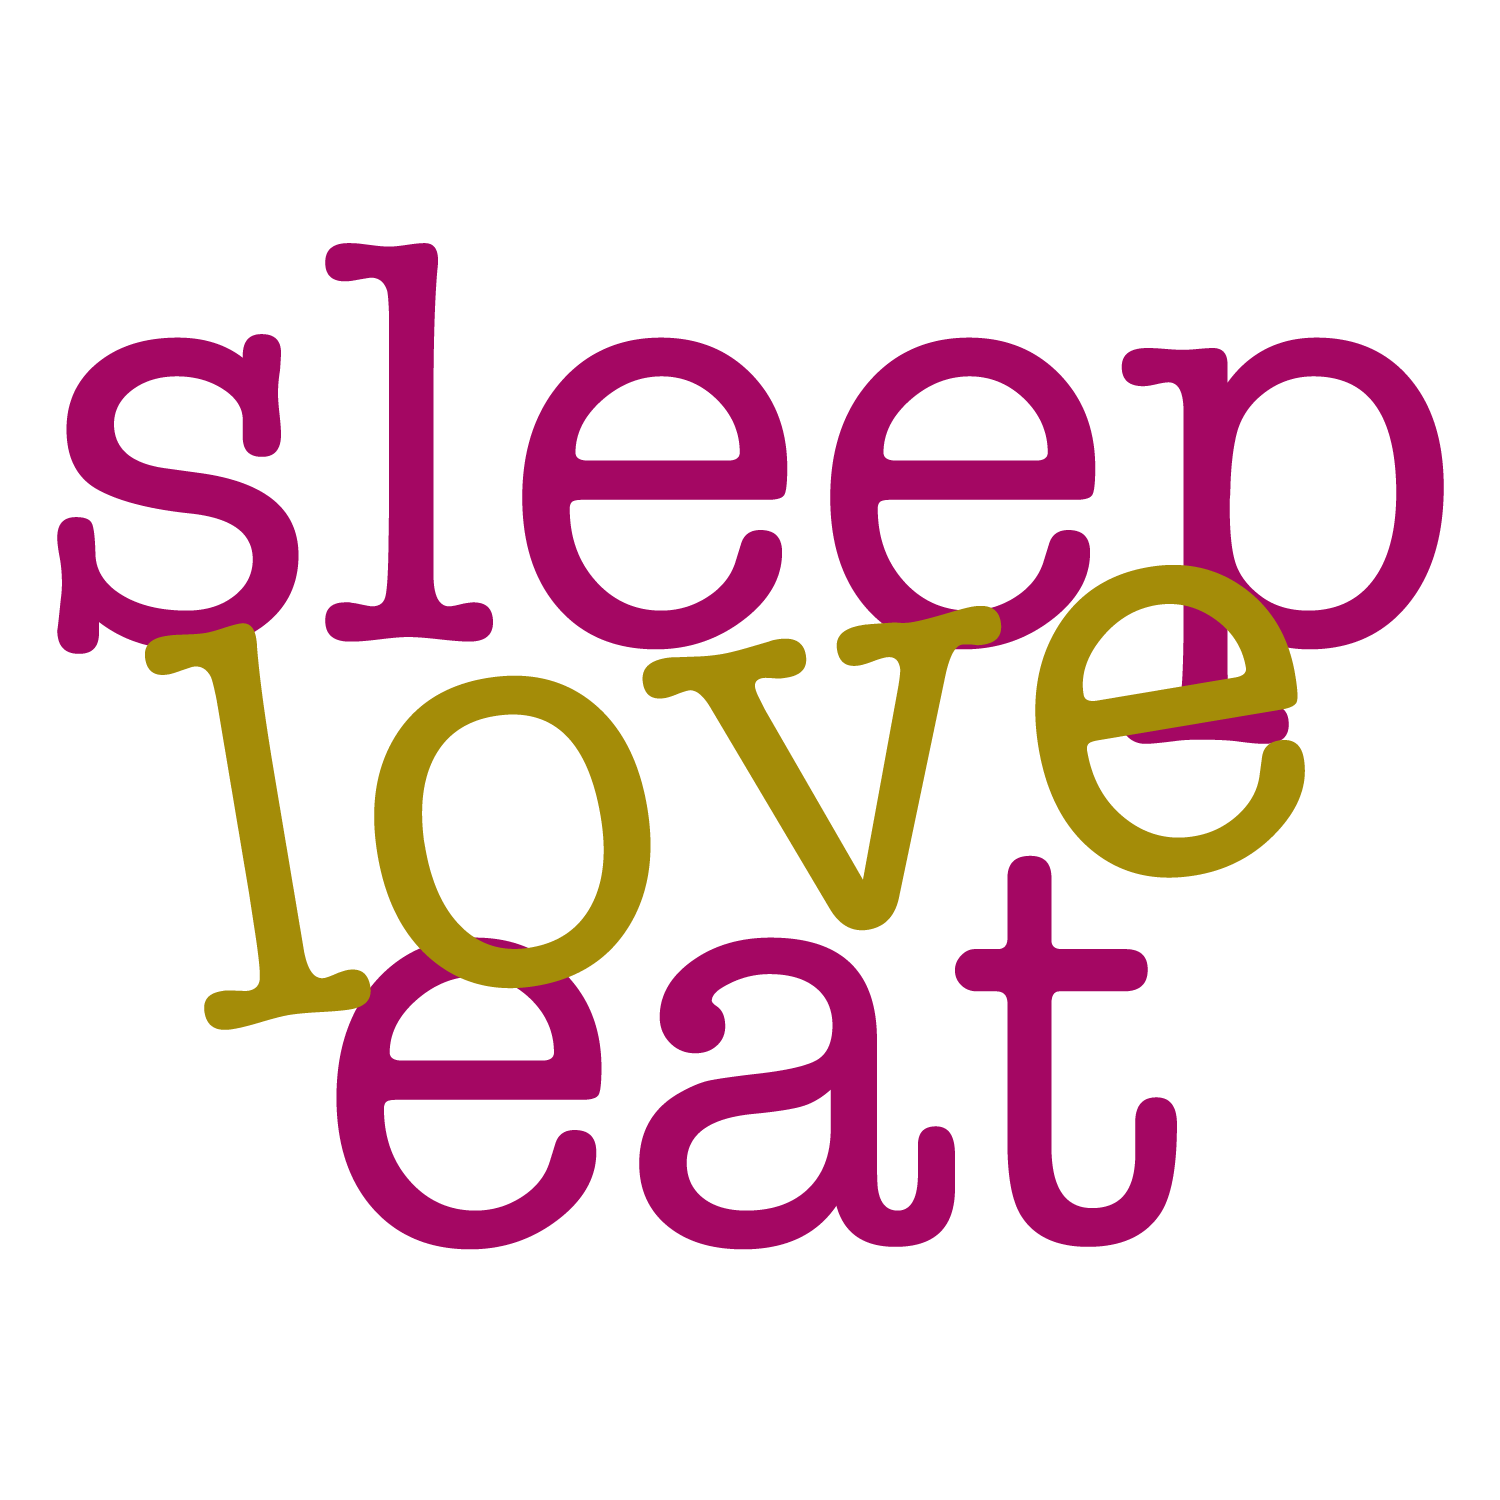 RESOURCES | Sleep Love Eat